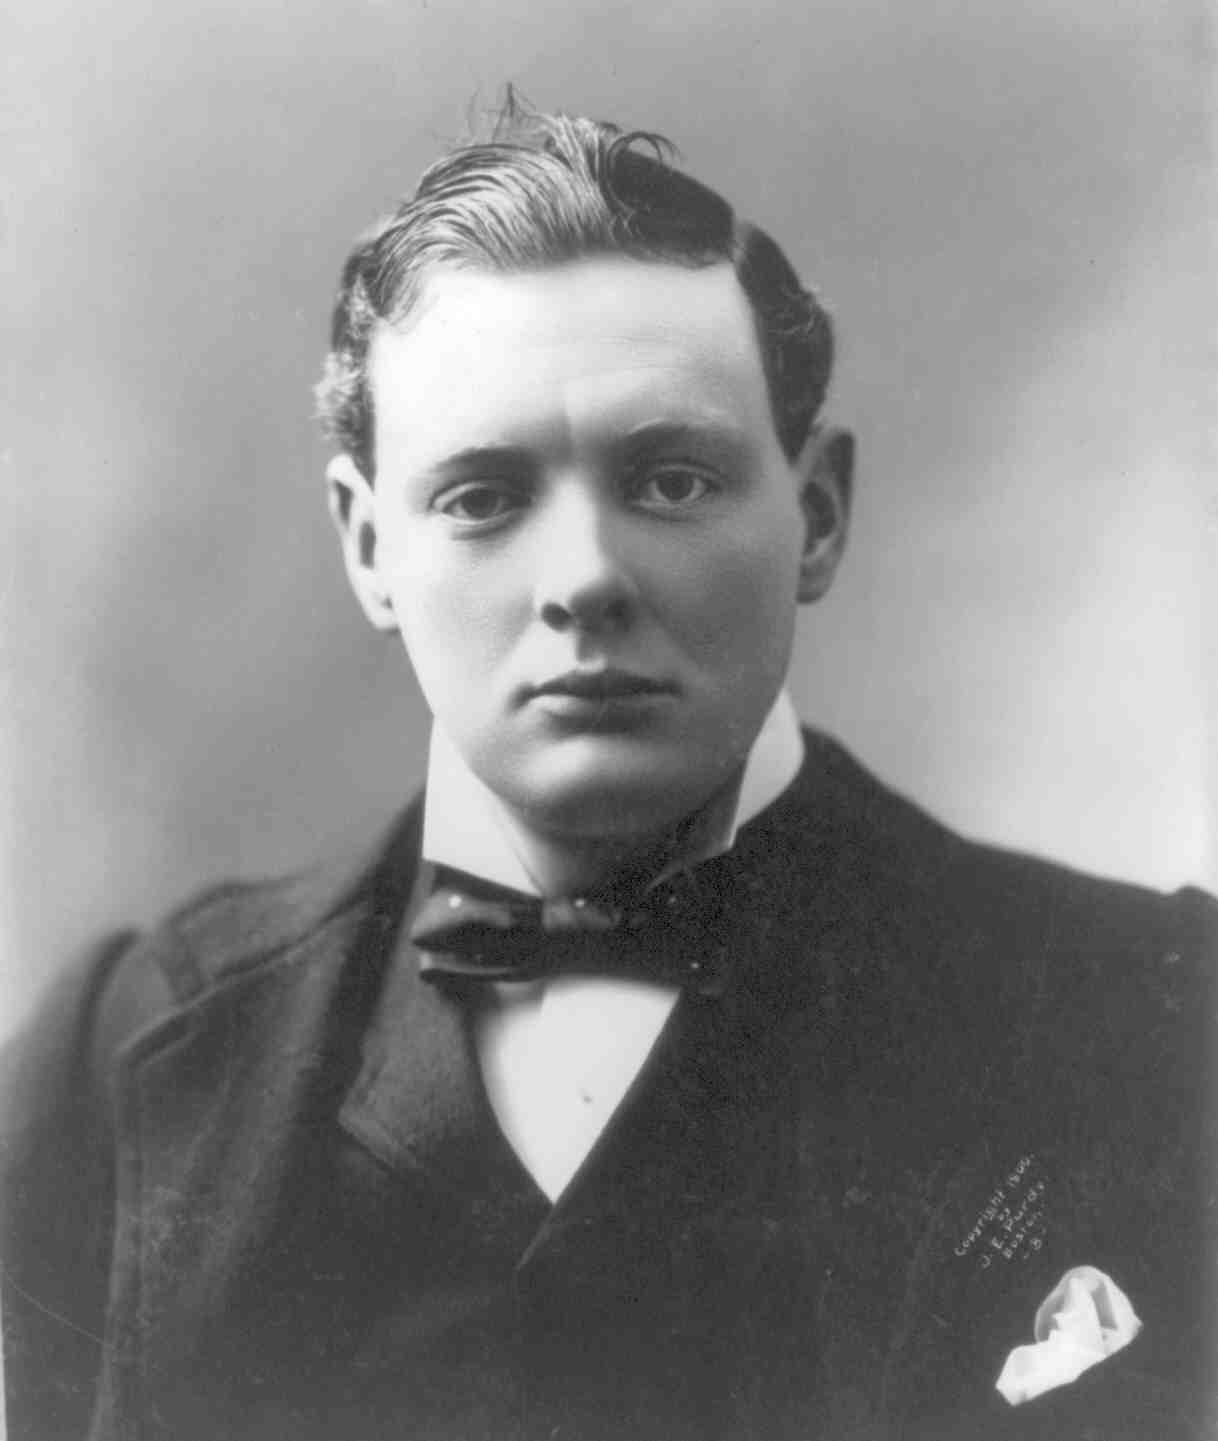 Portrait of Winston Churchill, 1900